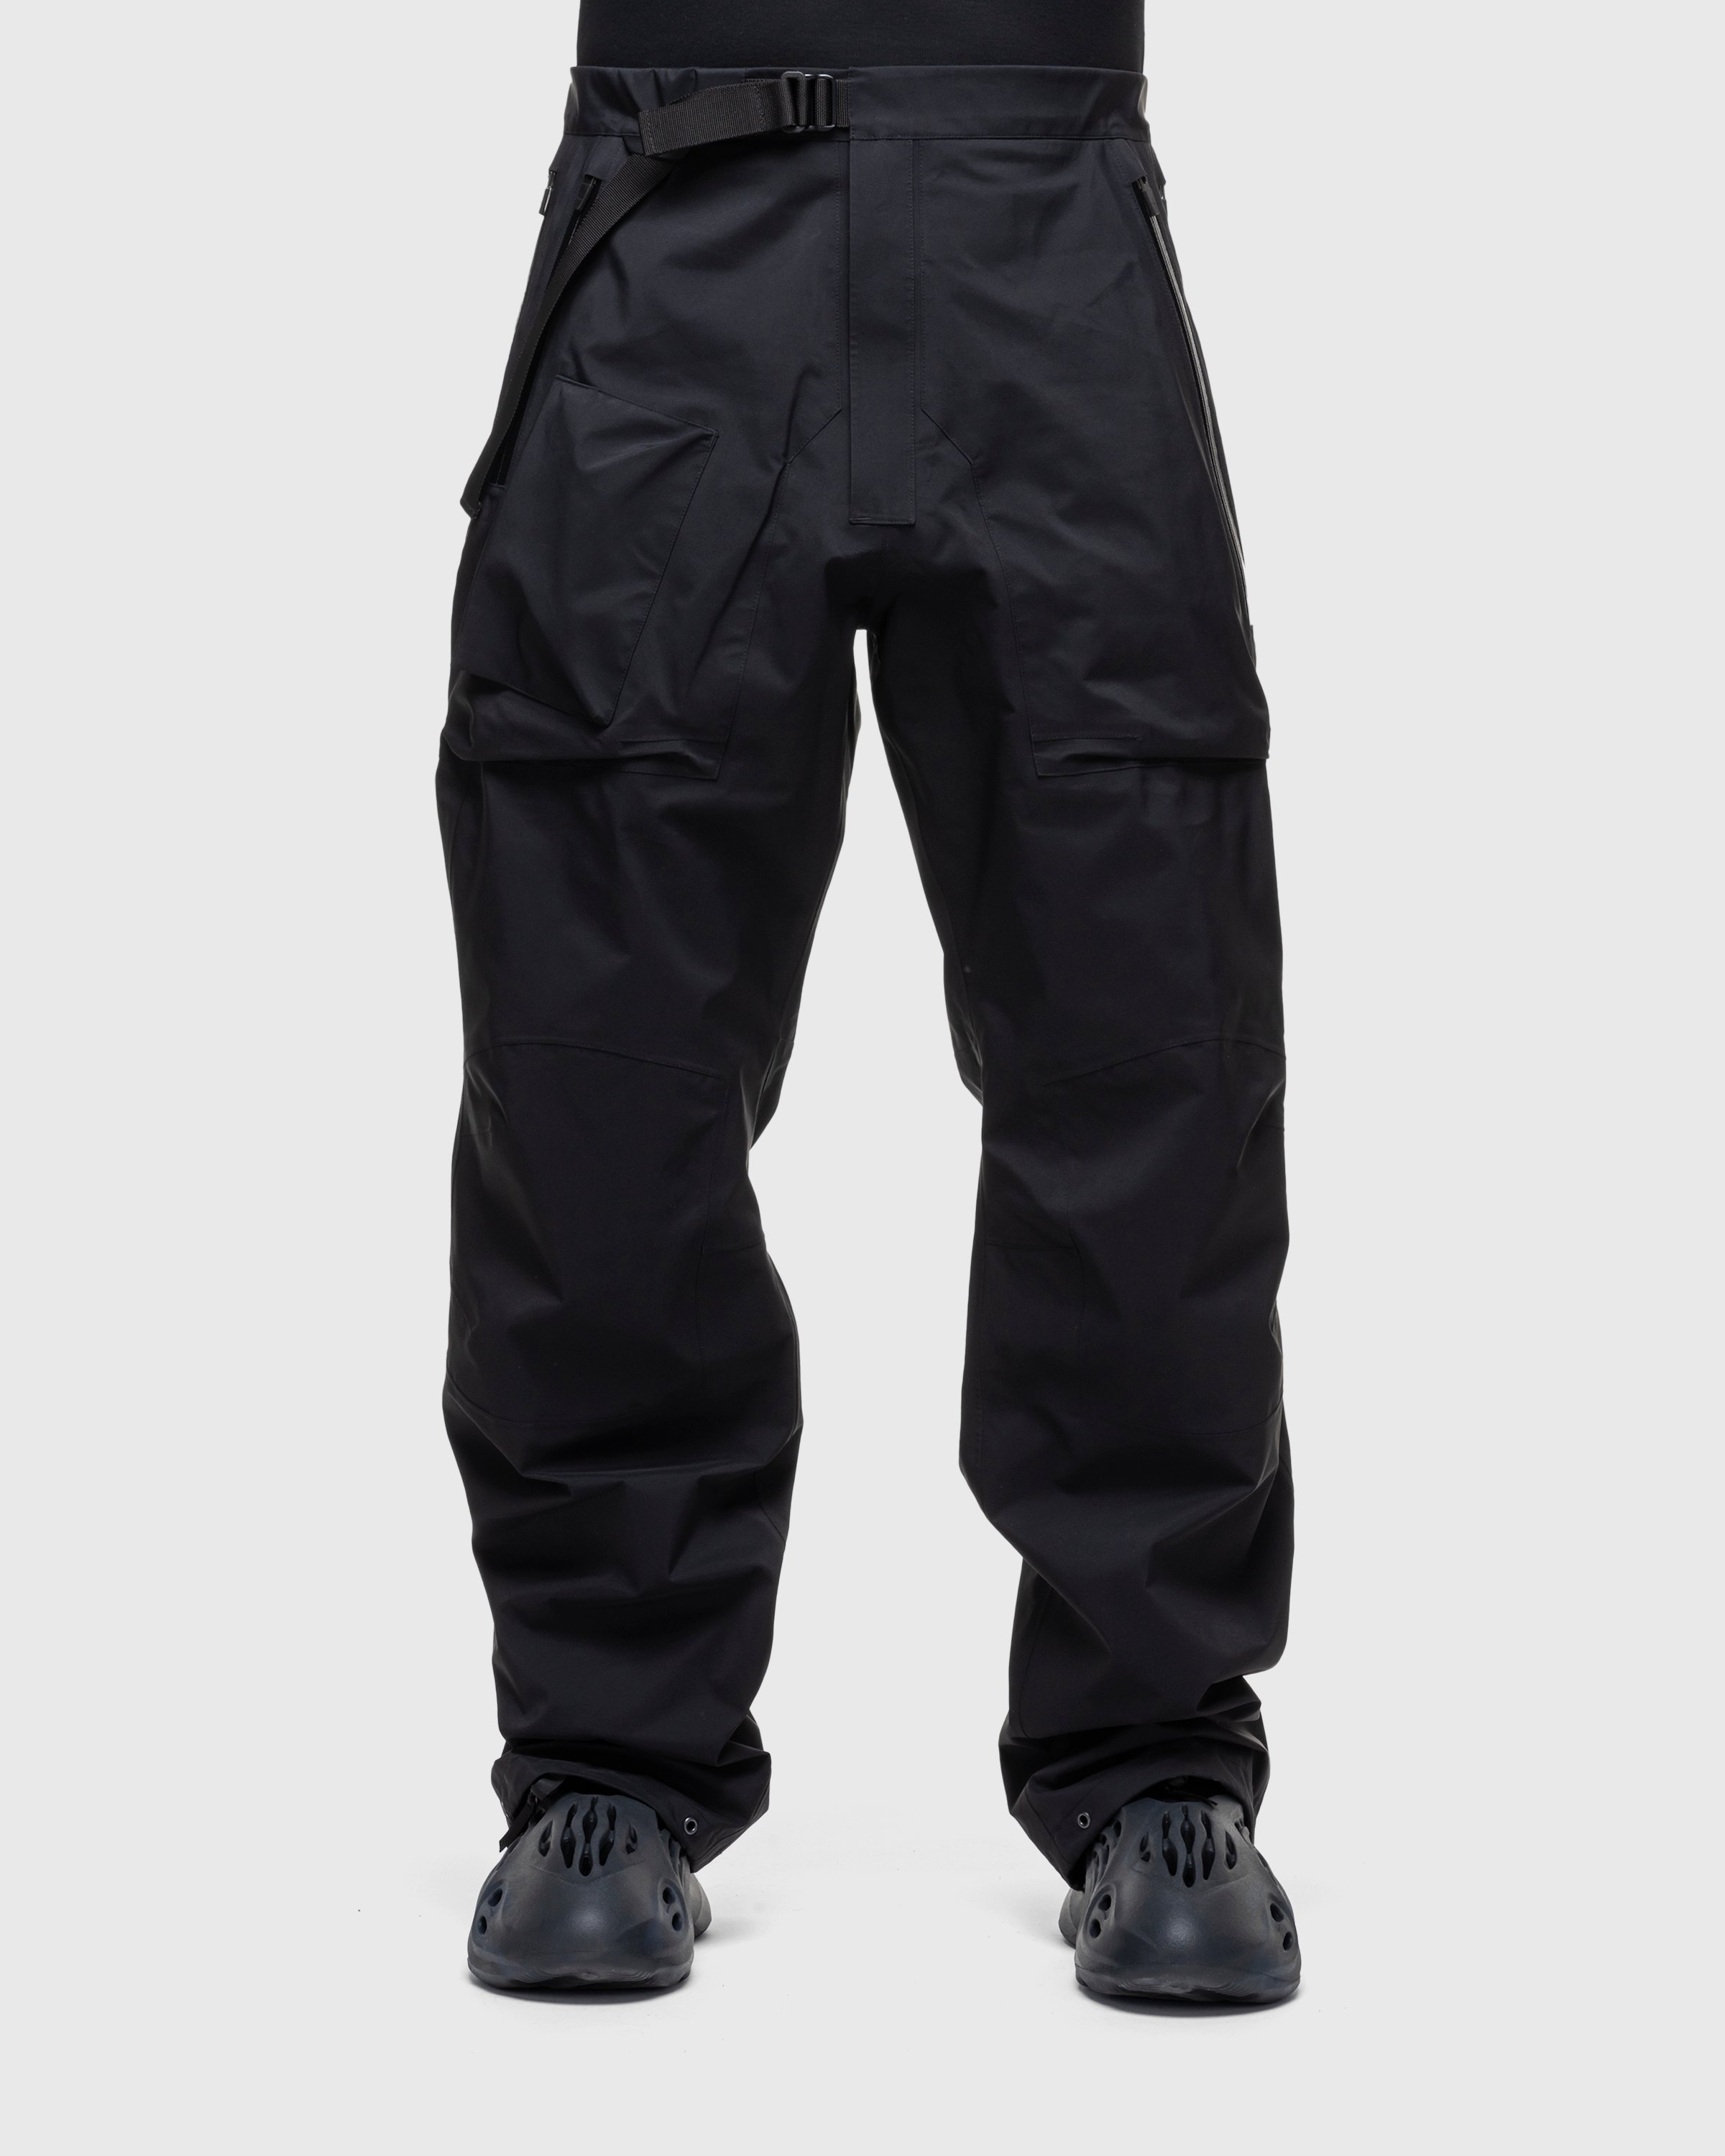 ACRONYM - P43-GT Pant Black - Clothing - Black - Image 2